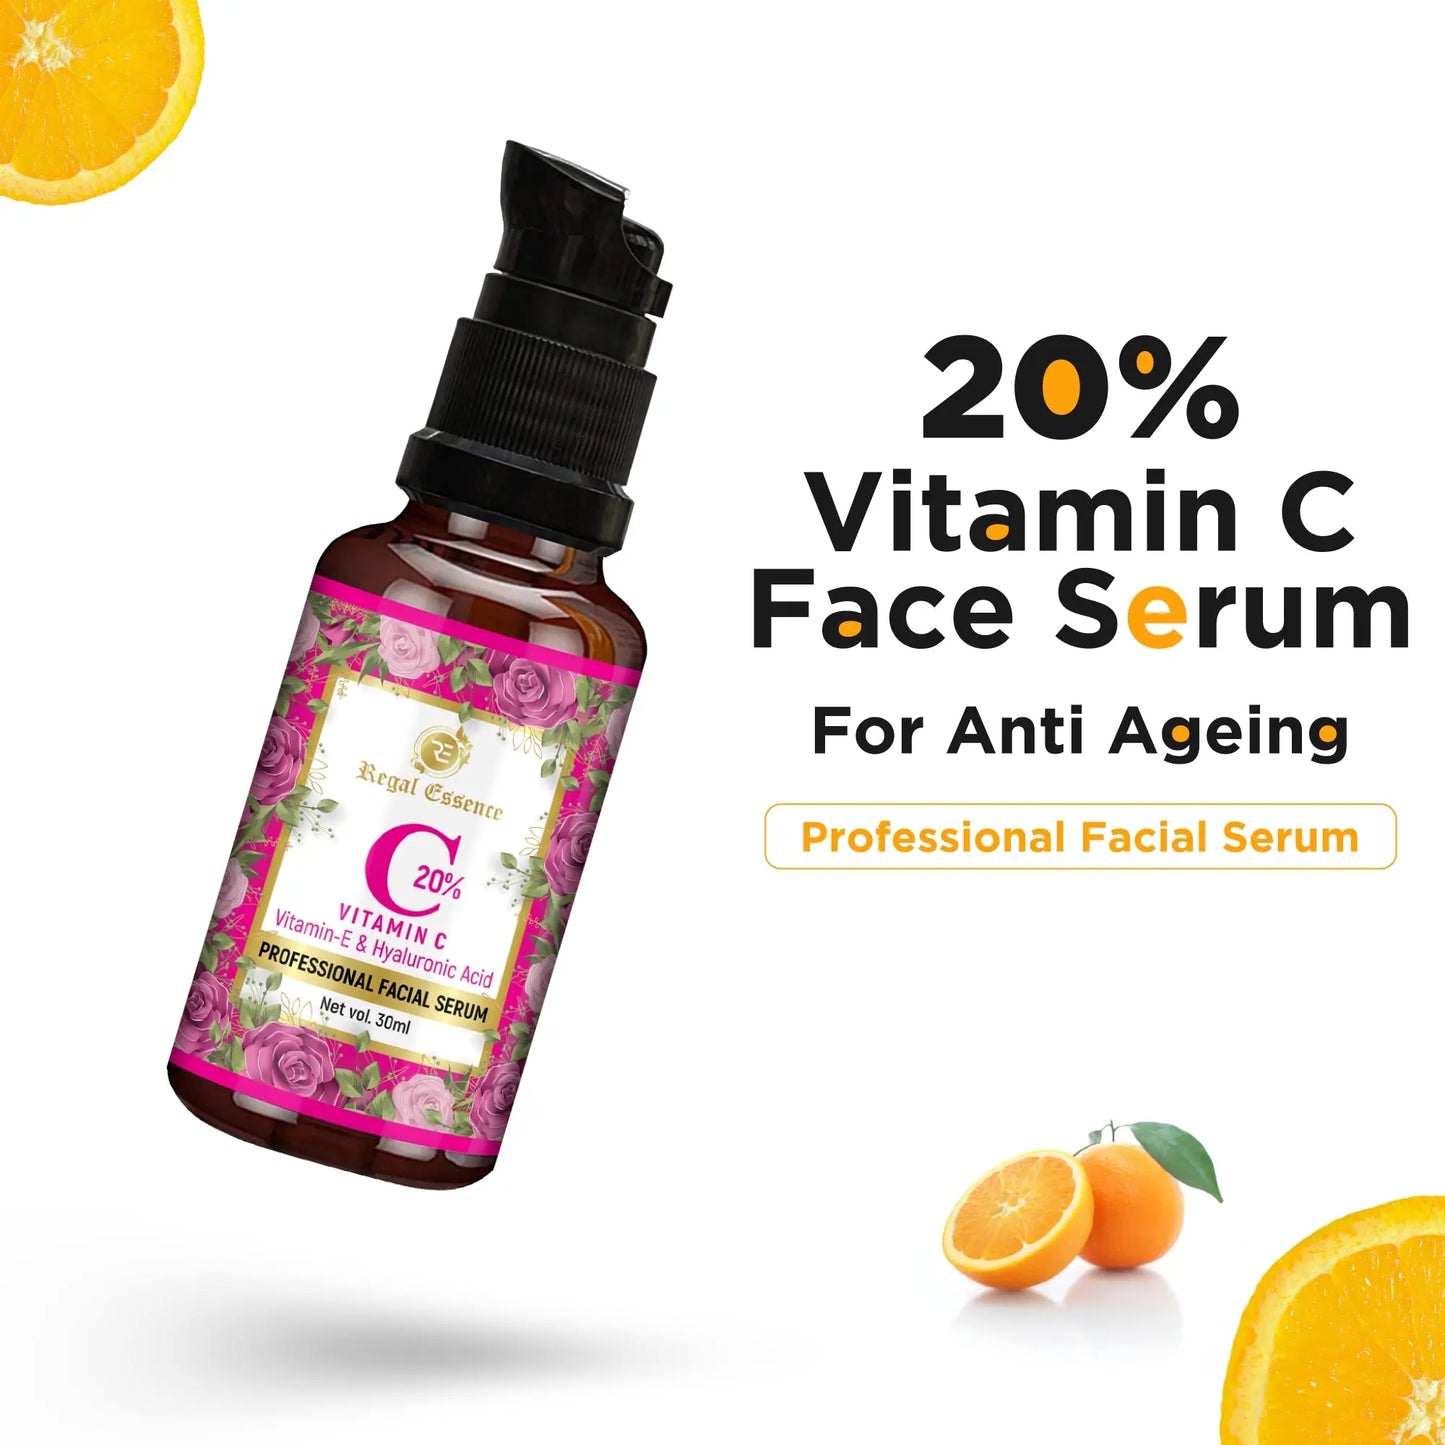 Regal Essence Vitamin C & E Hyaluronic Acid Professional Facial Serum -30ML Vedapure Naturals